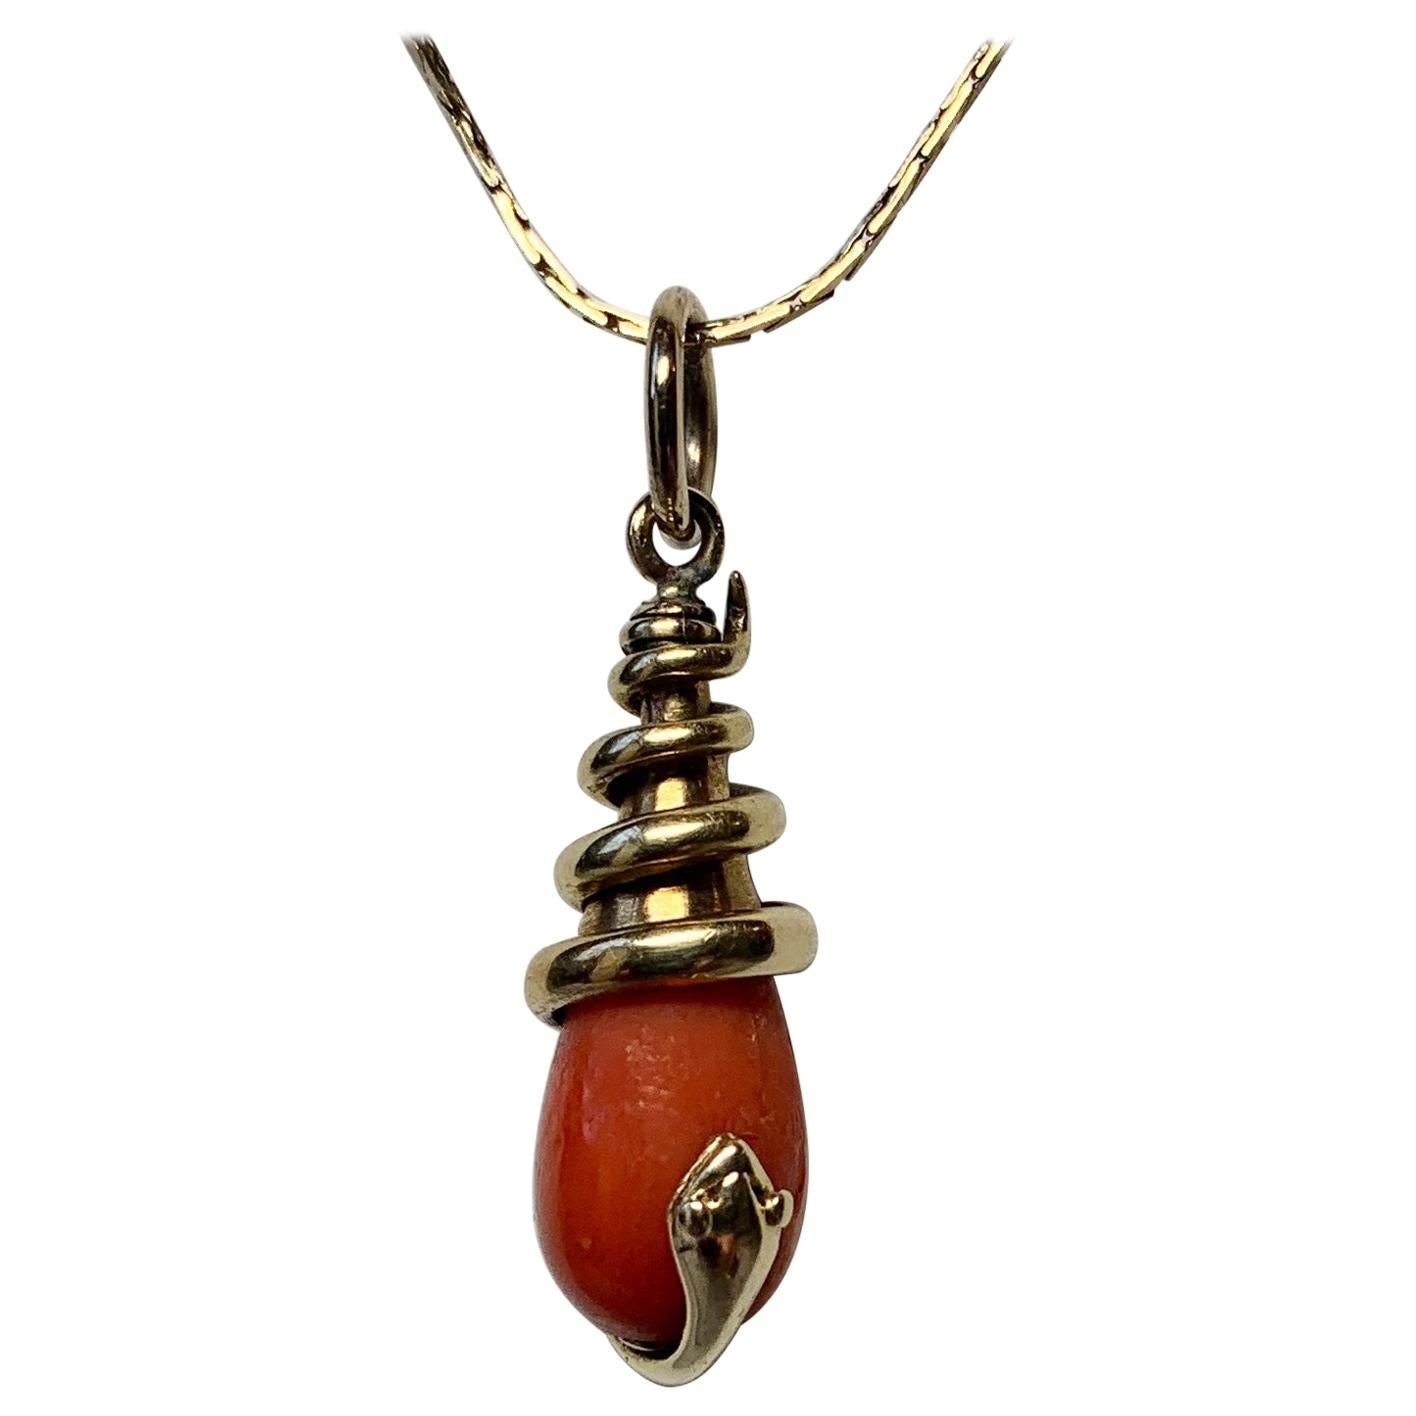 Victorian Coral Snake Pendant Necklace Antique 14 Karat Gold 1800s Rare